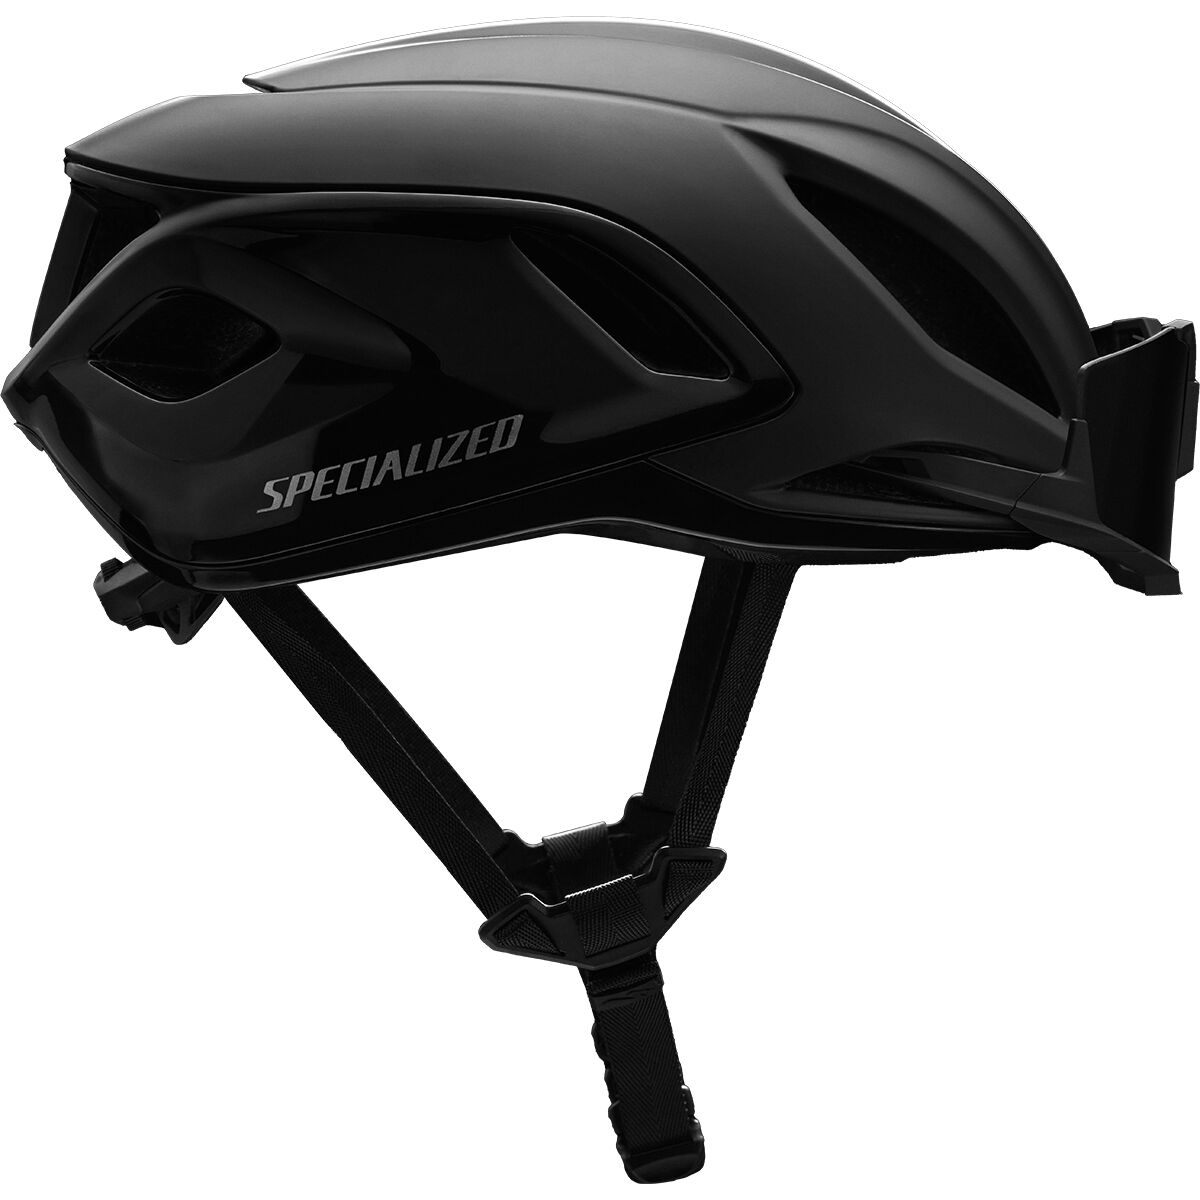 Specialized Propero 4 Bike Helmet Black, S